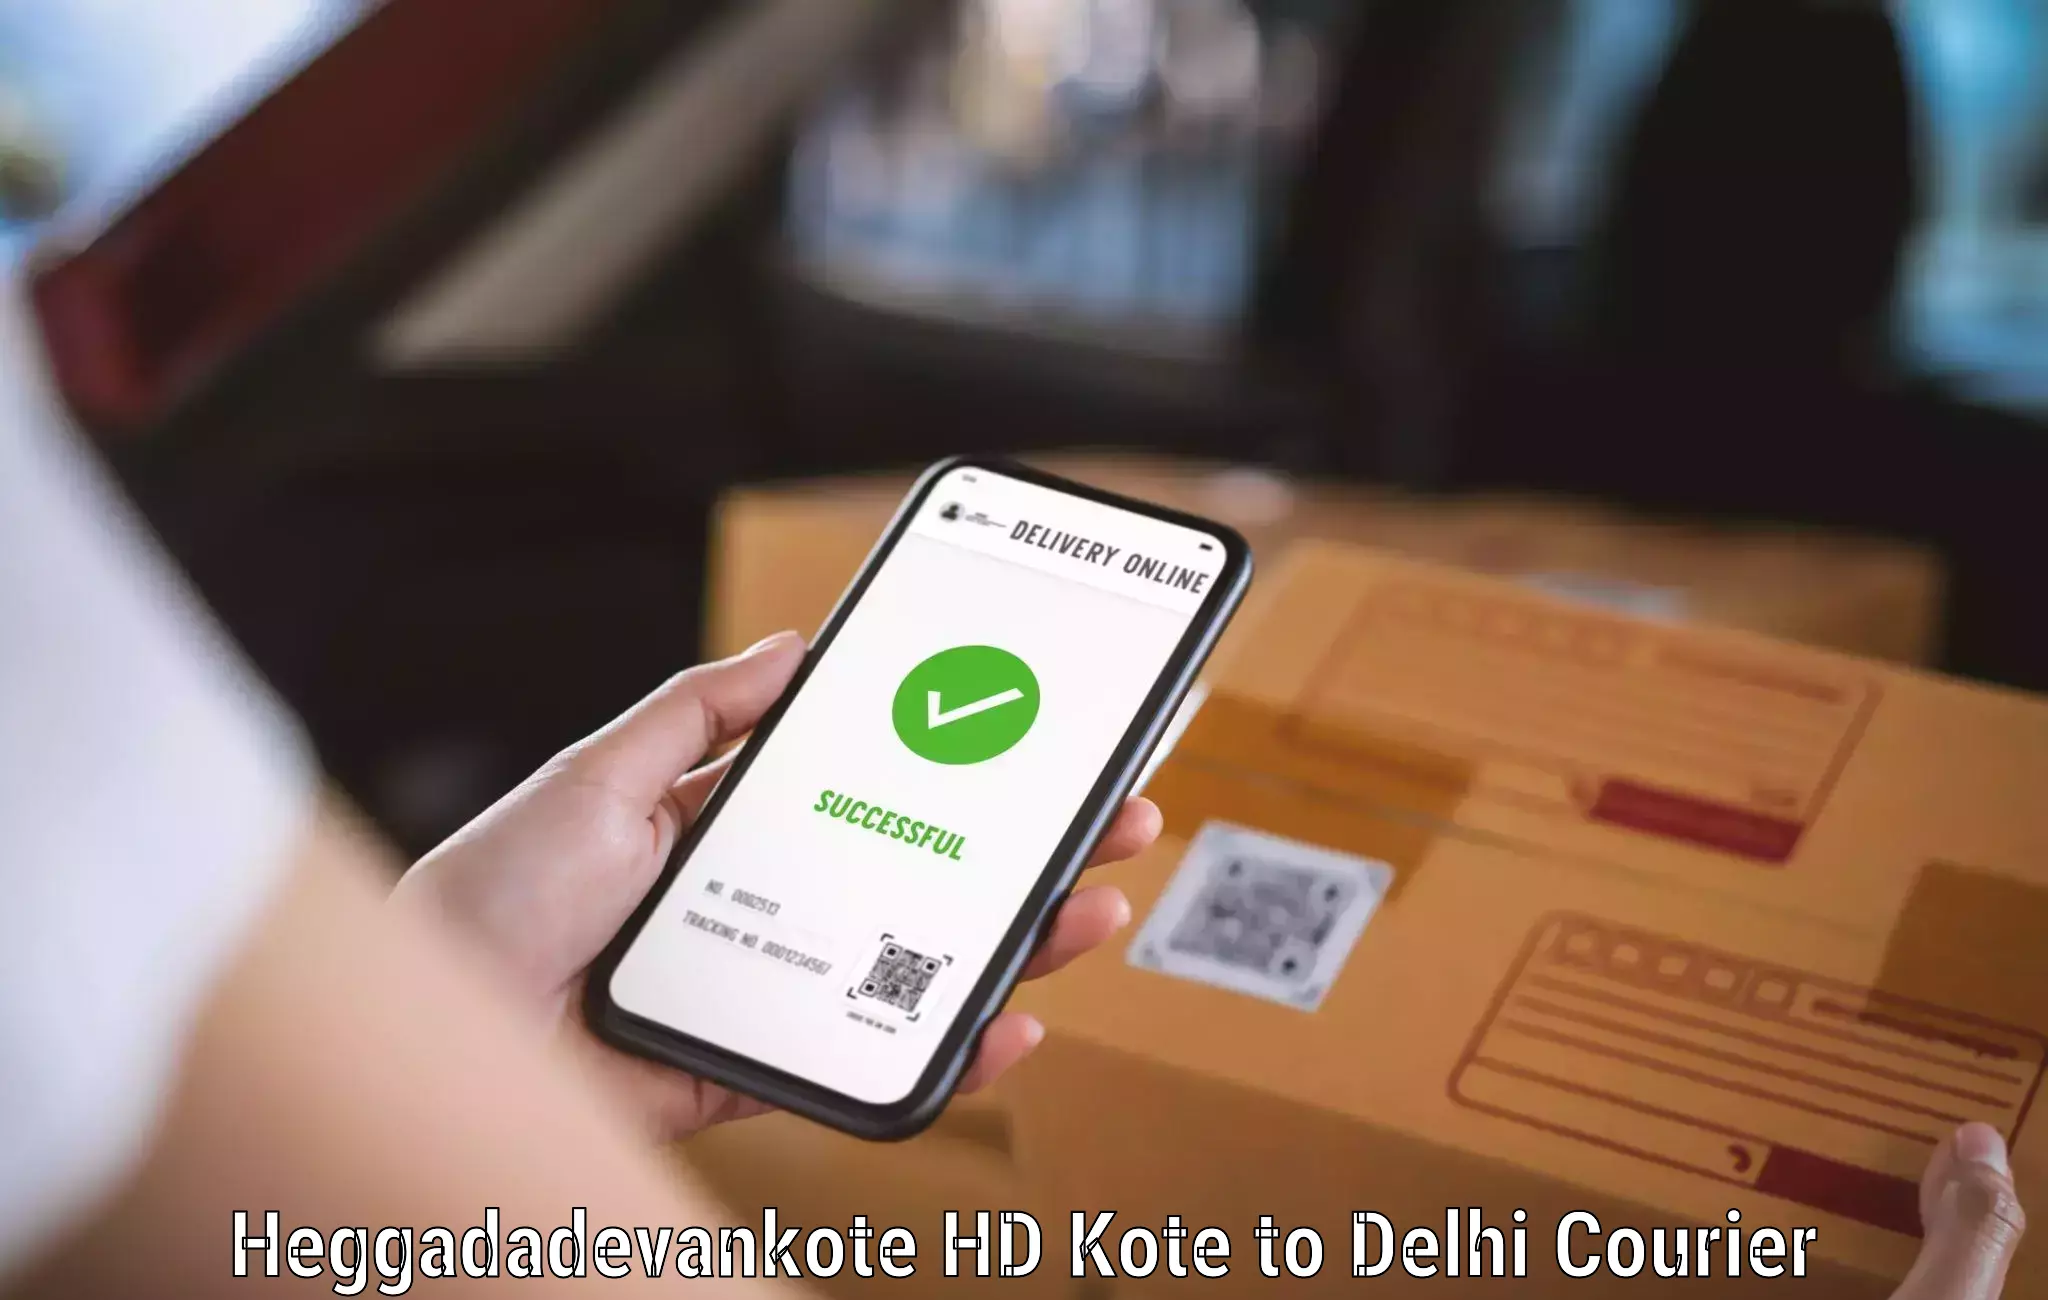 Rapid freight solutions Heggadadevankote HD Kote to University of Delhi